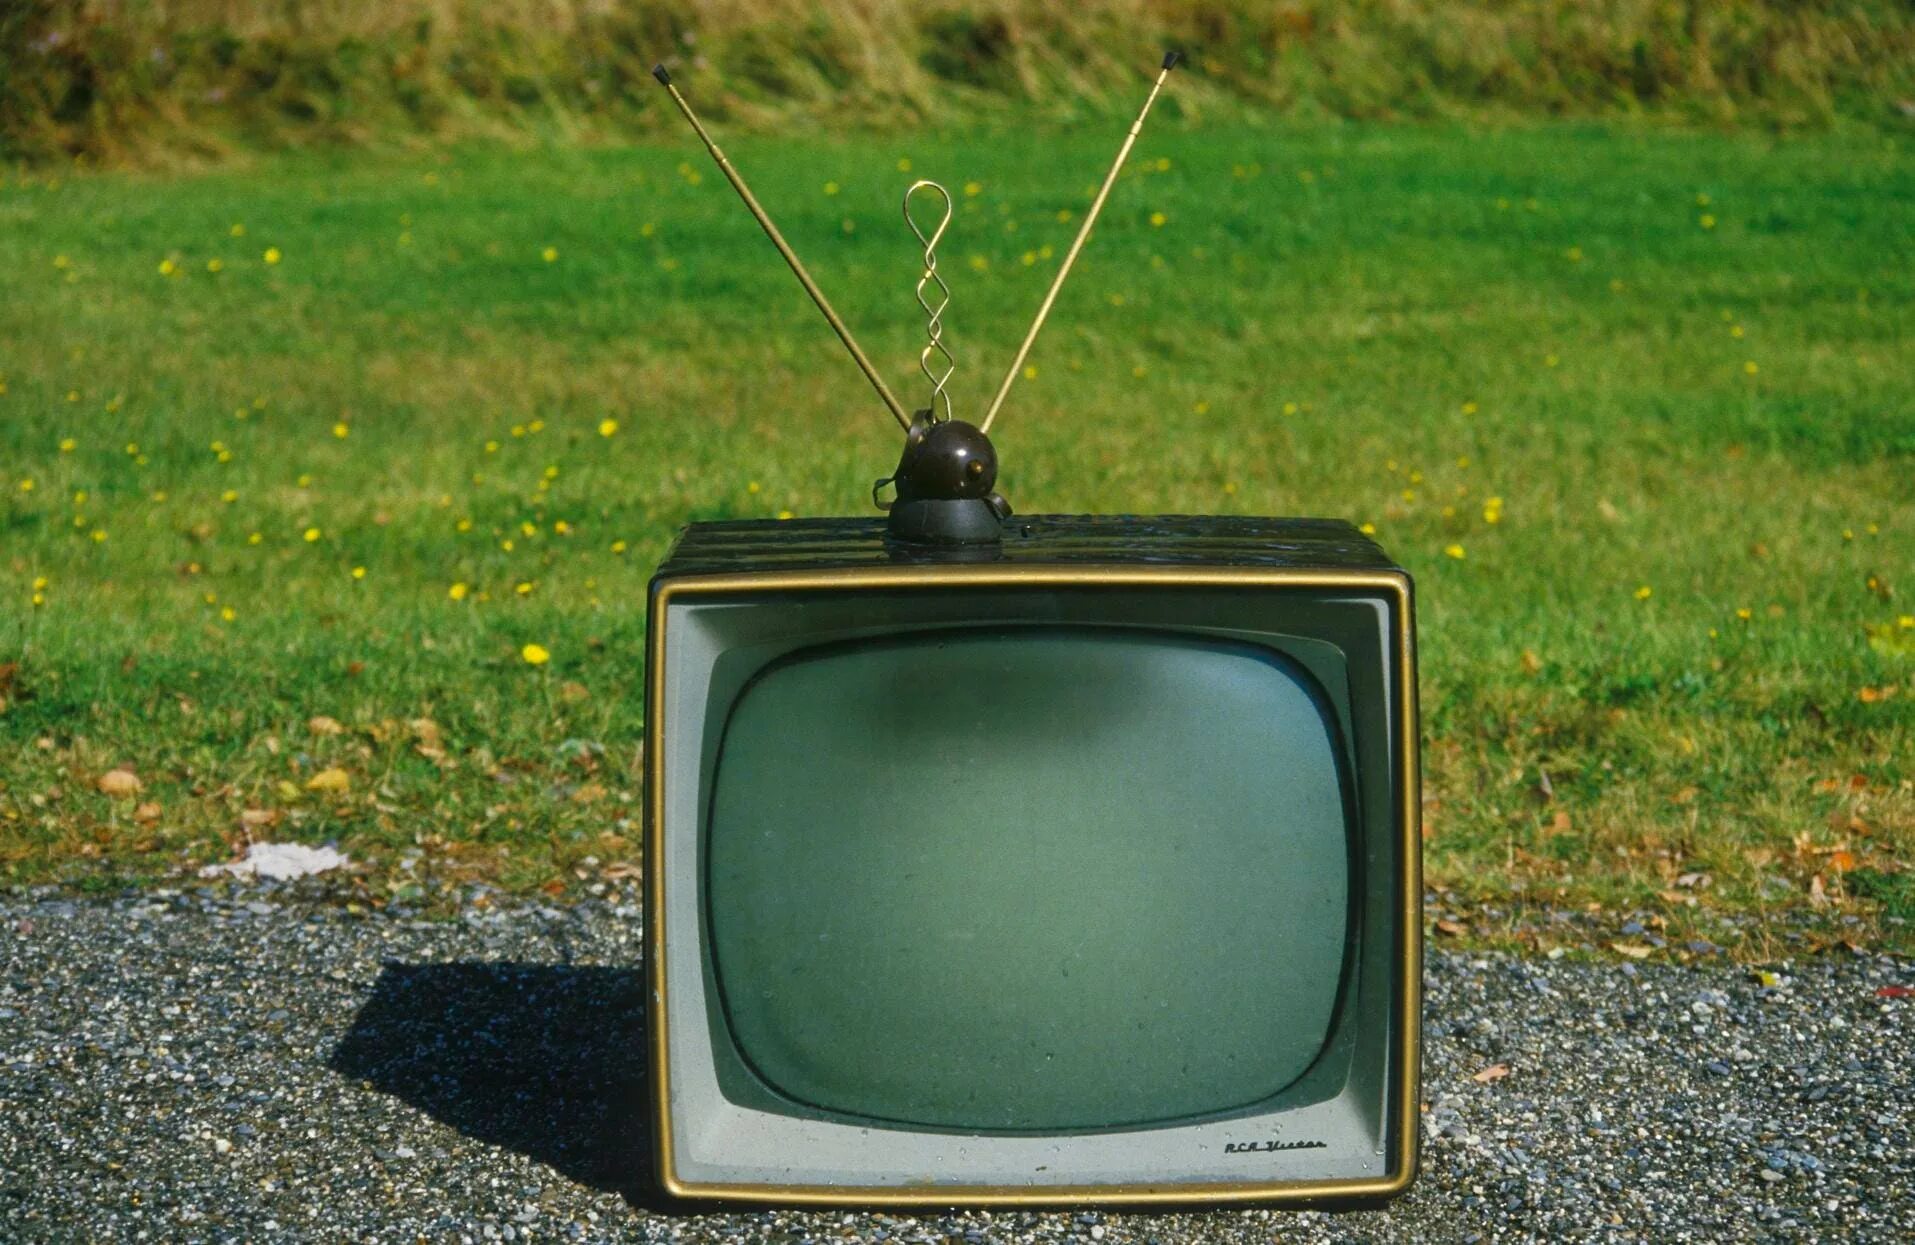 Old tv shows. Старый телевизор. Телевизор с антенной. Старый телевизор с антенной. Ретро телевизор.